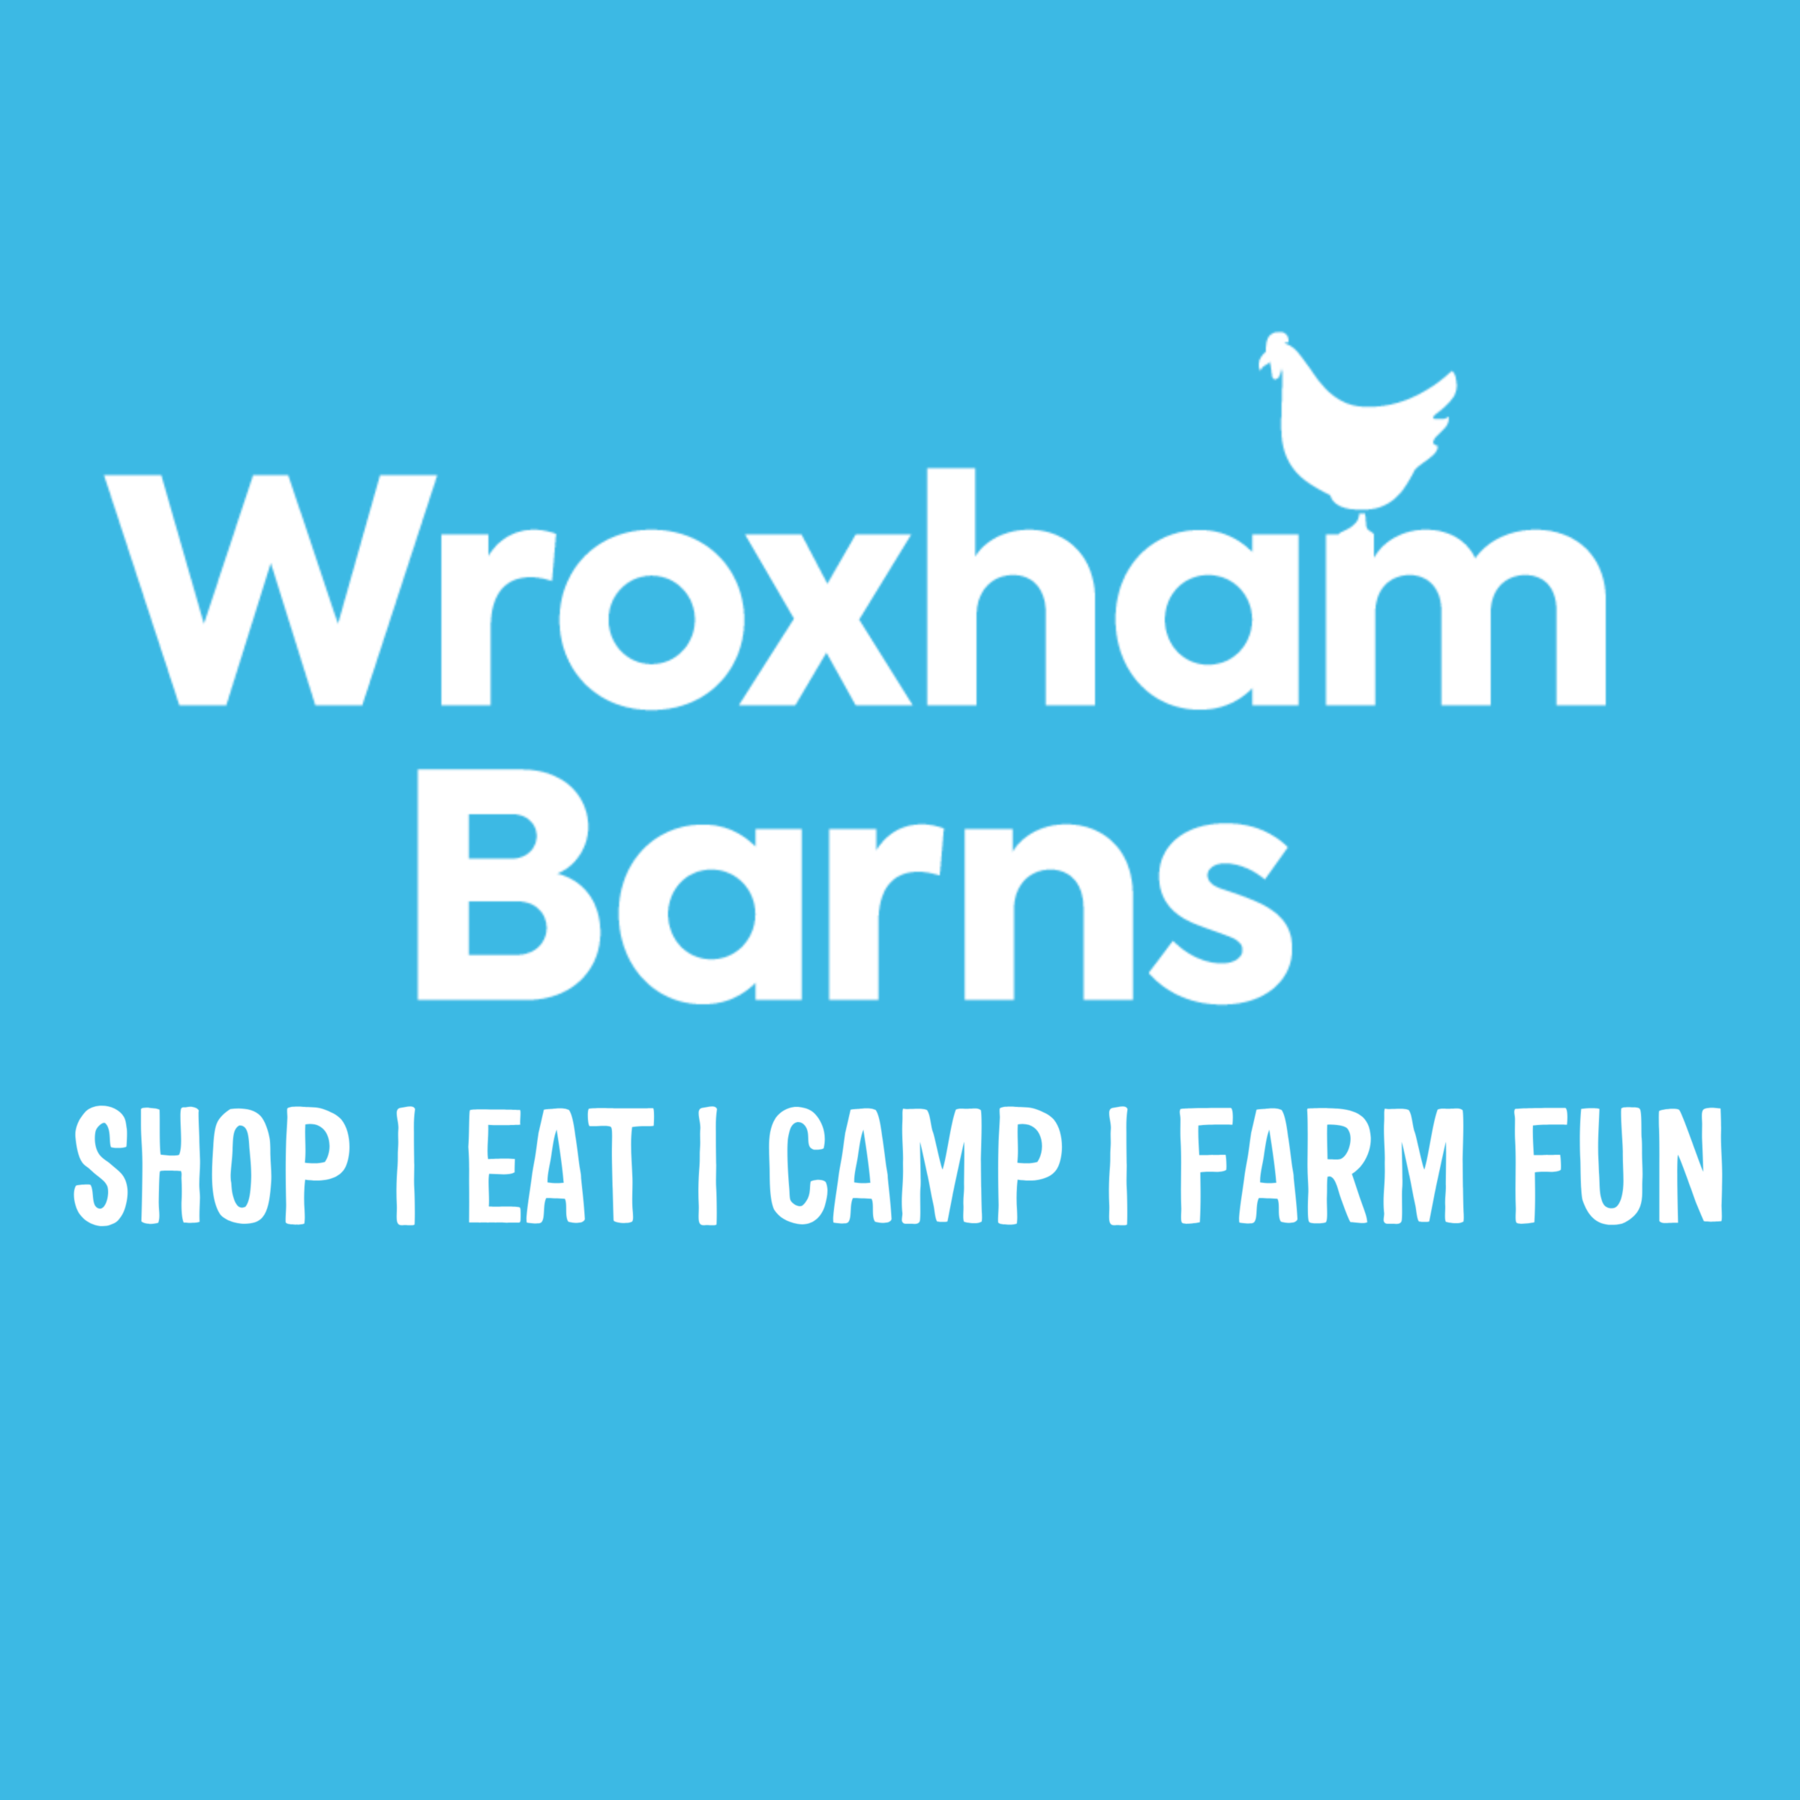 Company Image : Wroxham Barns logo